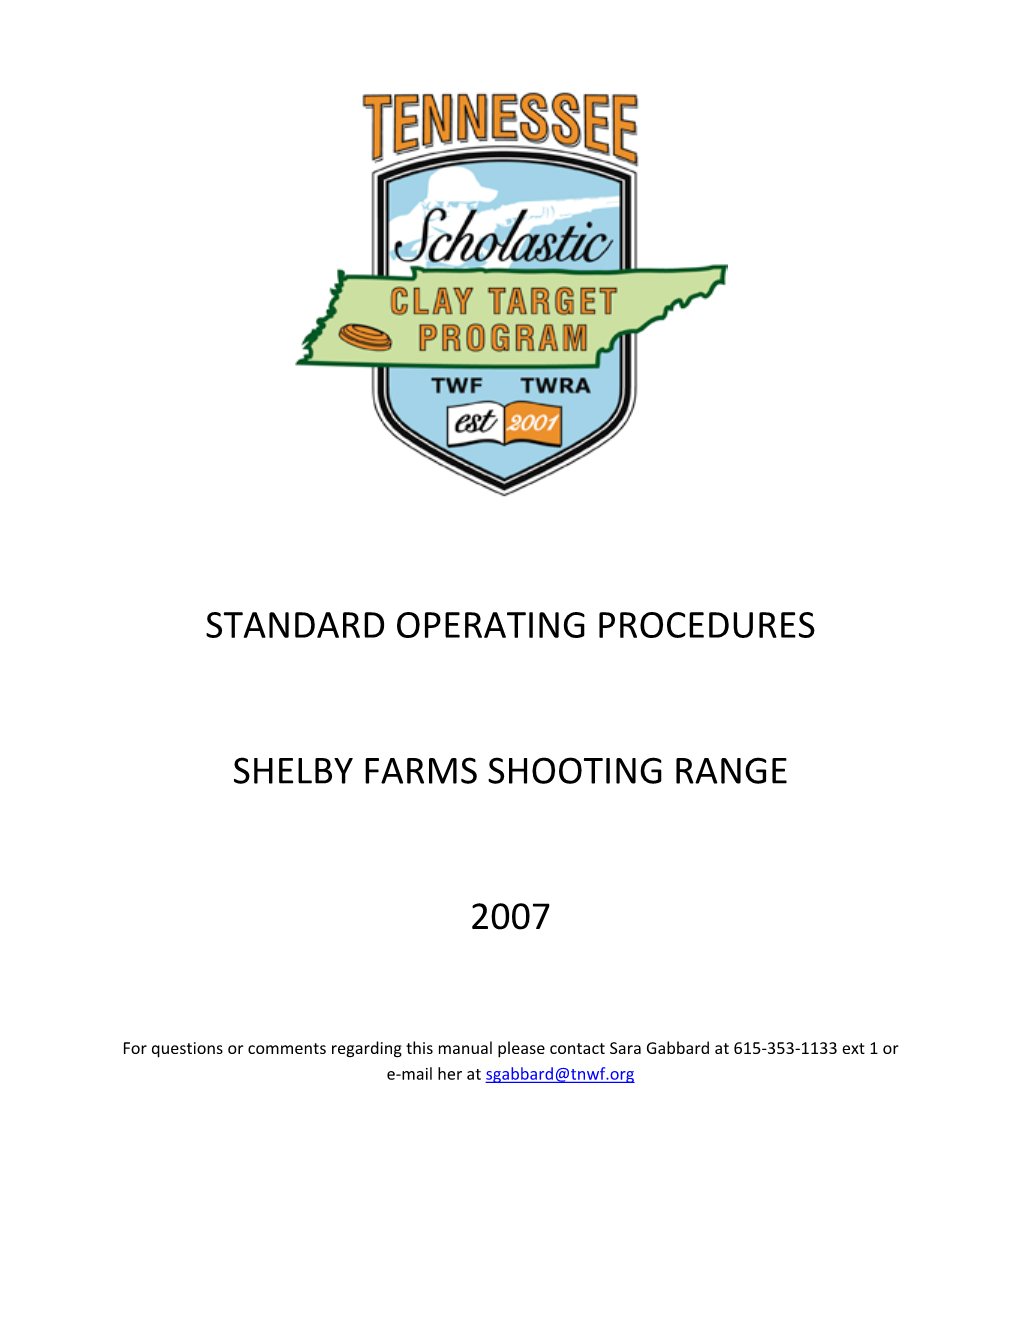 TNSCTP Shooting Range (Shelby Farms)